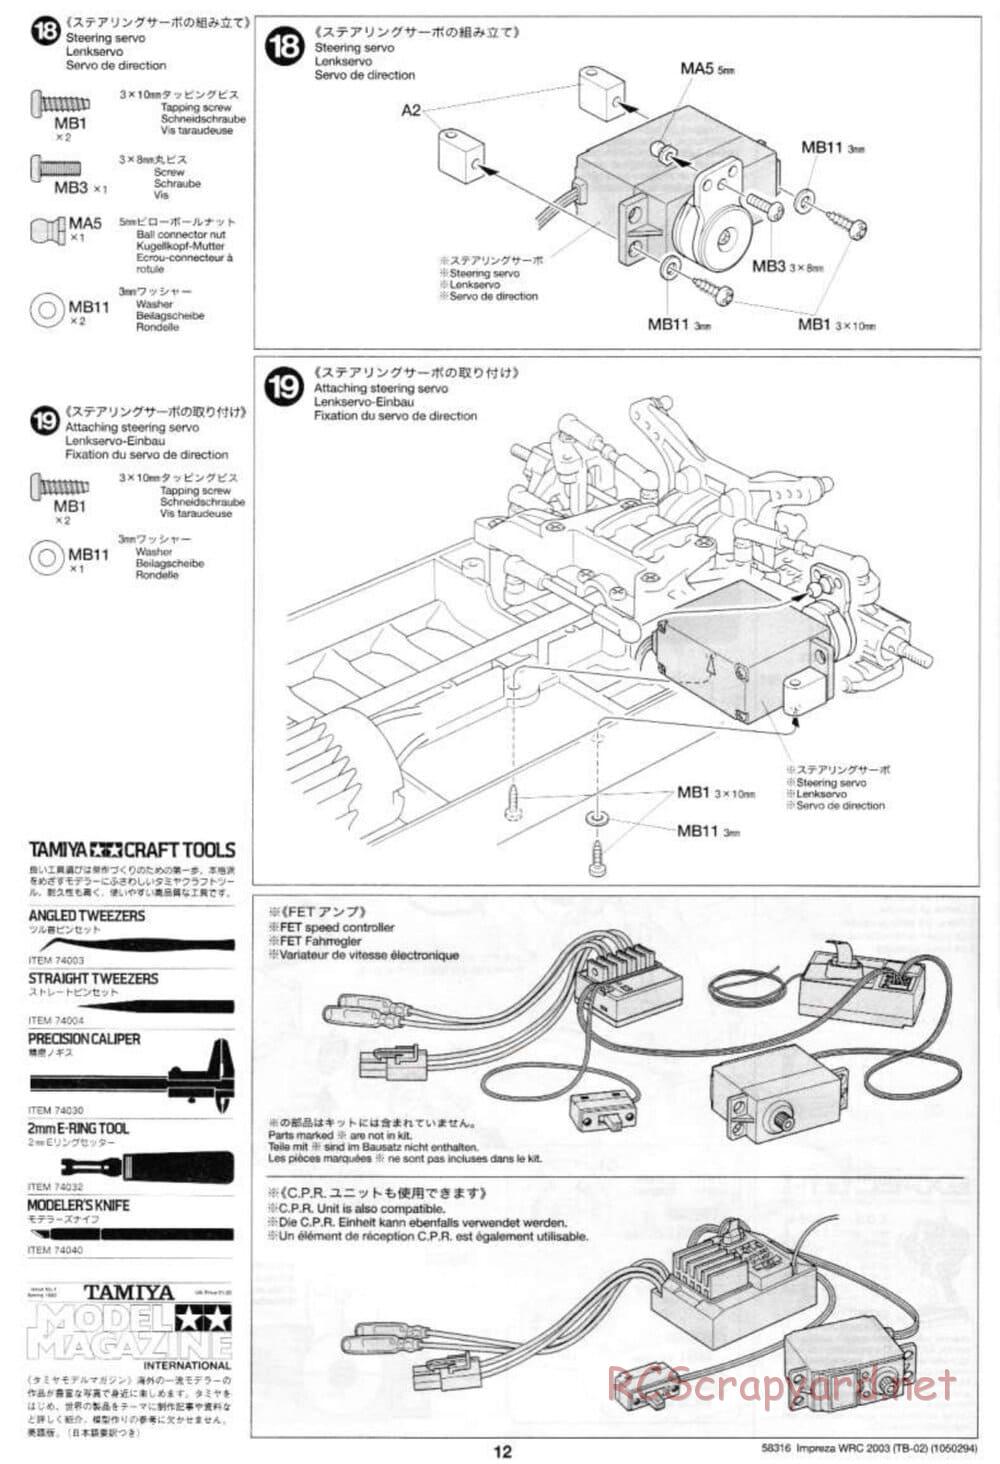 Tamiya - Subaru Impreza WRC 2003 - TB-02 Chassis - Manual - Page 12